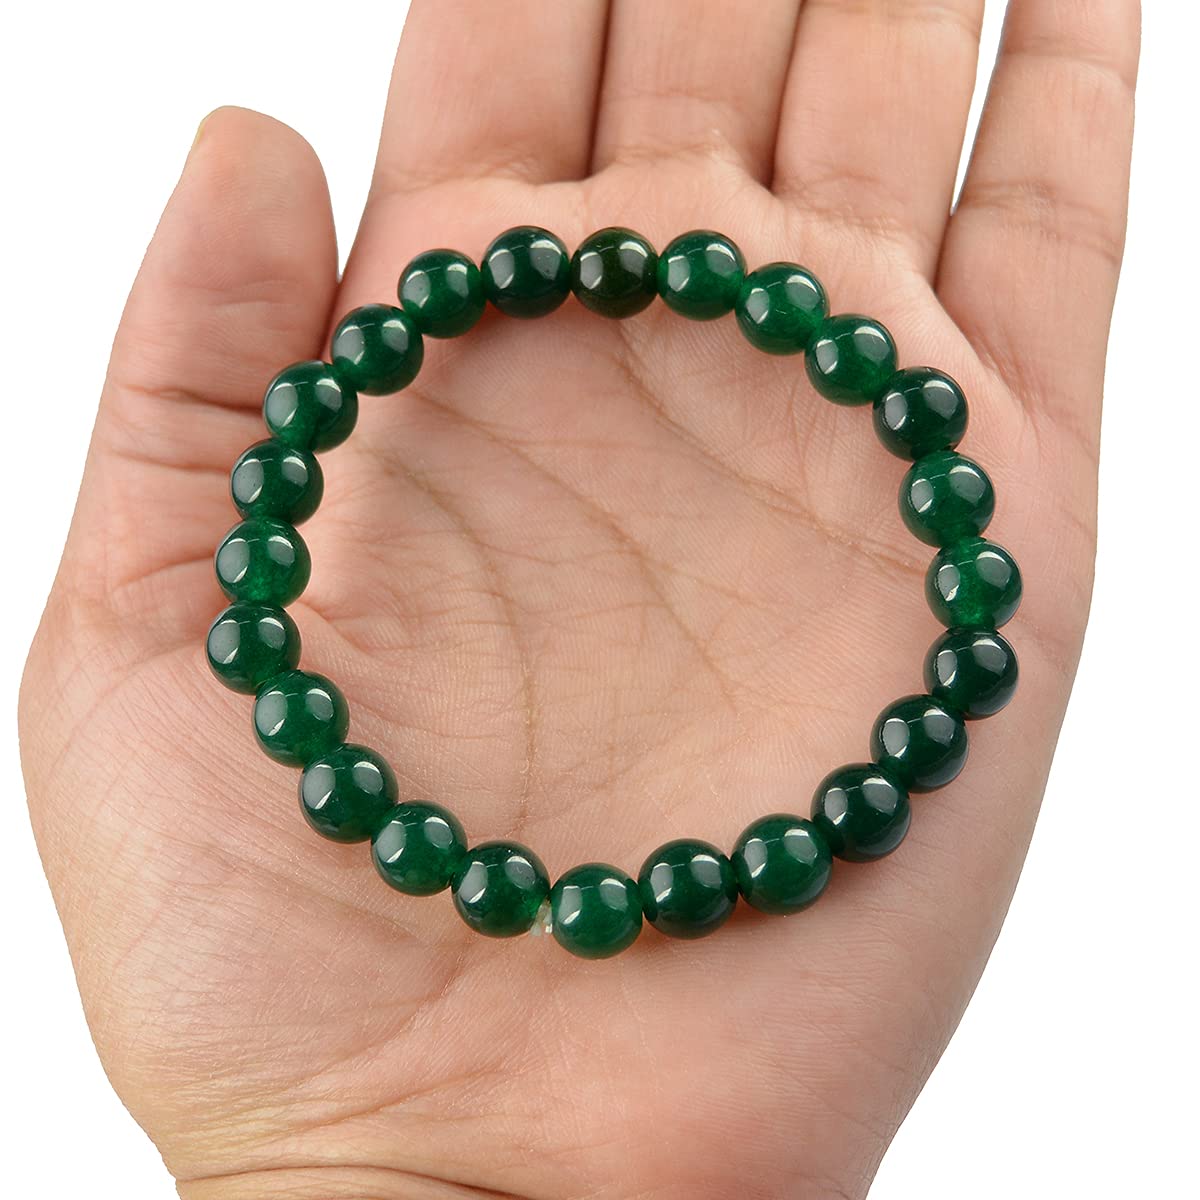 Green Aventurine Healing Crystal Bracelet - 8mm Round Beads - Beaded Bracelet